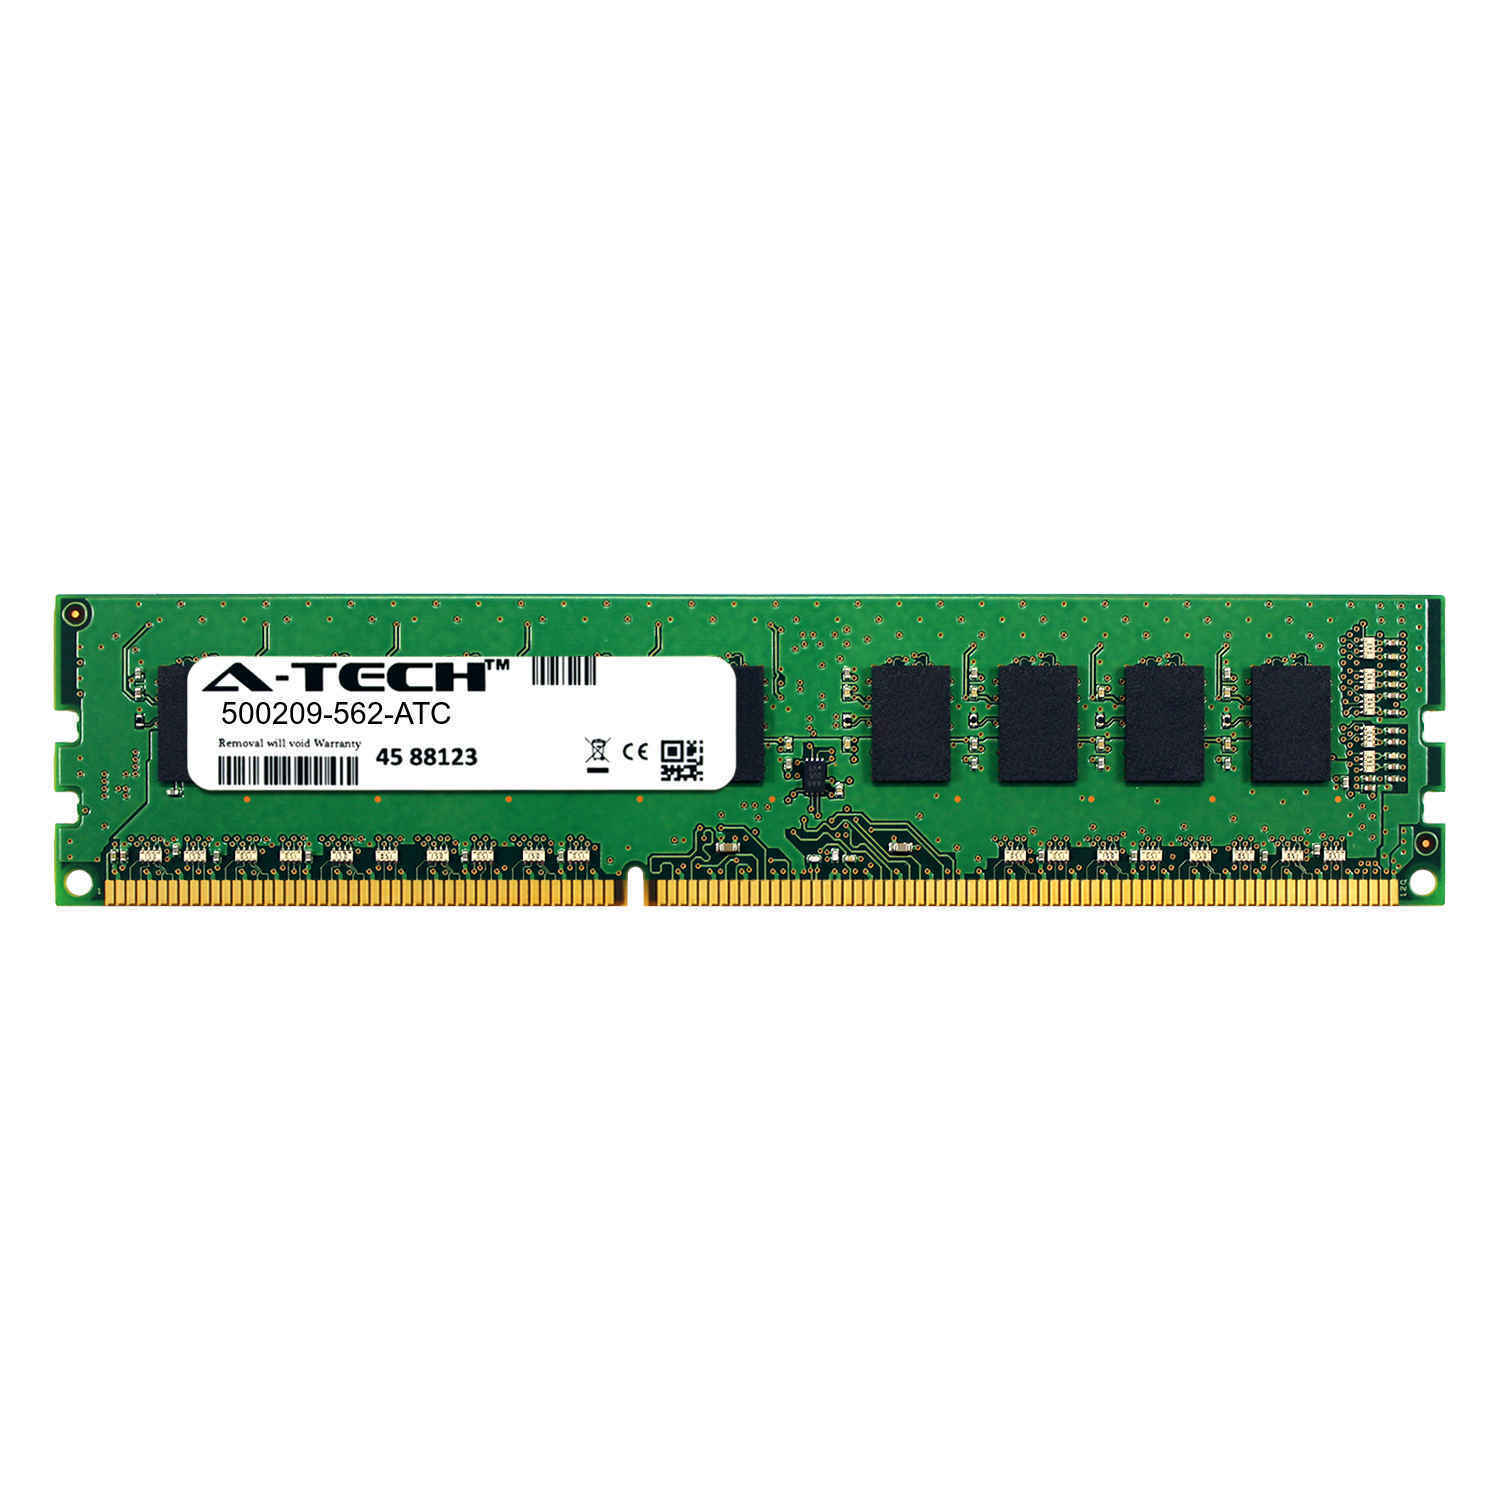 2GB DDR3 PC3-10600E ECC UDIMM (HP 500209-562 Equivalent) Server Memory RAM